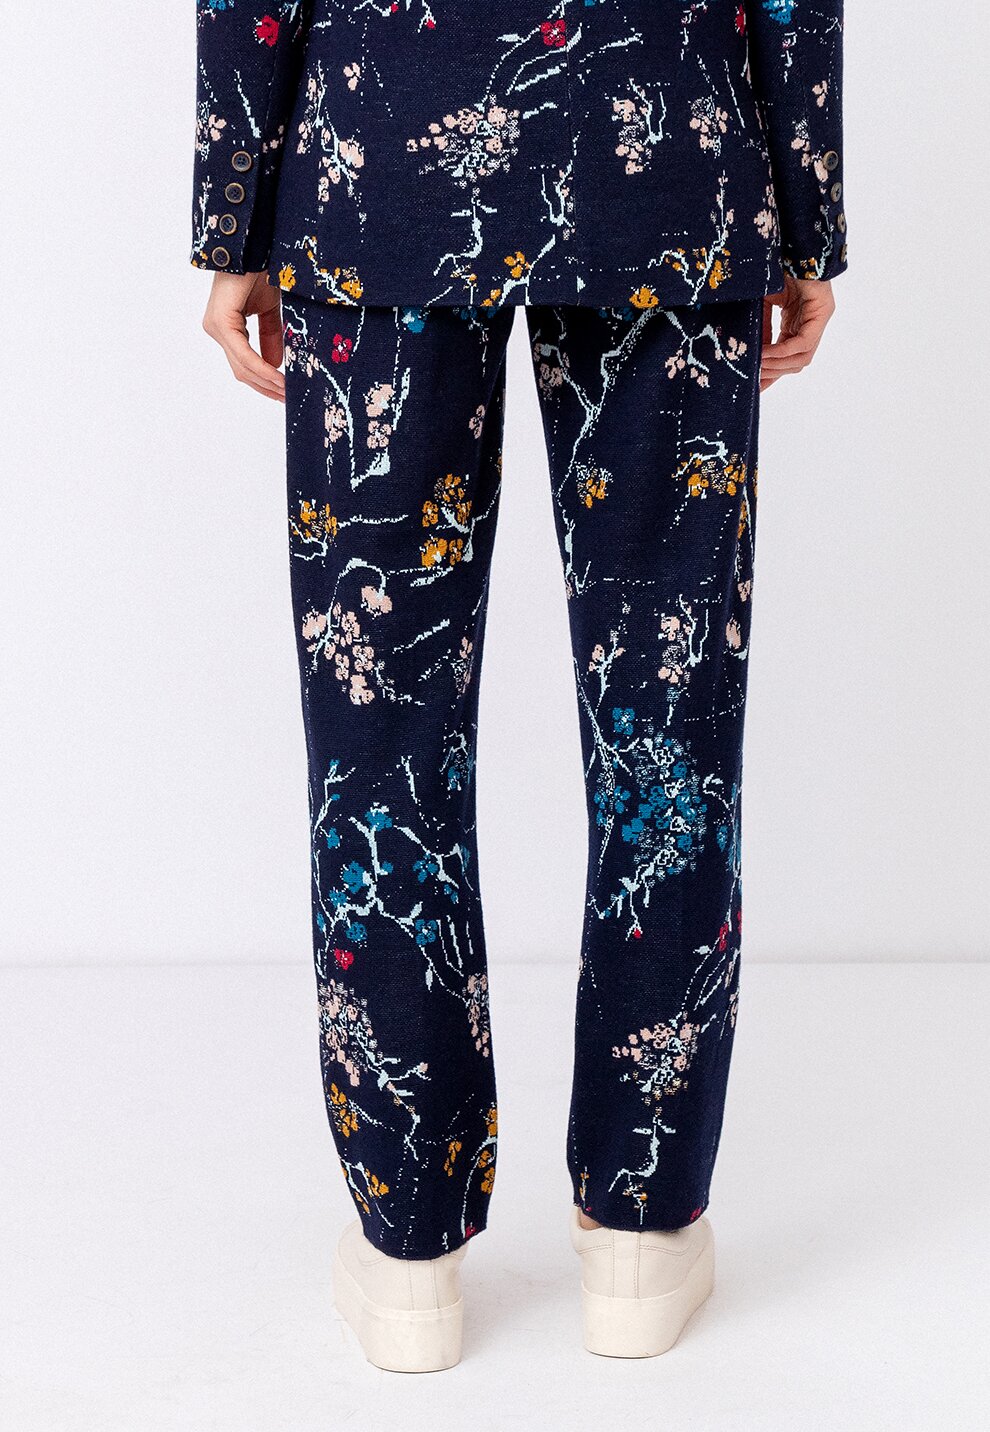 Jacquard Pants, Cherry Blossom Pattern - Pants - Ivko Woman